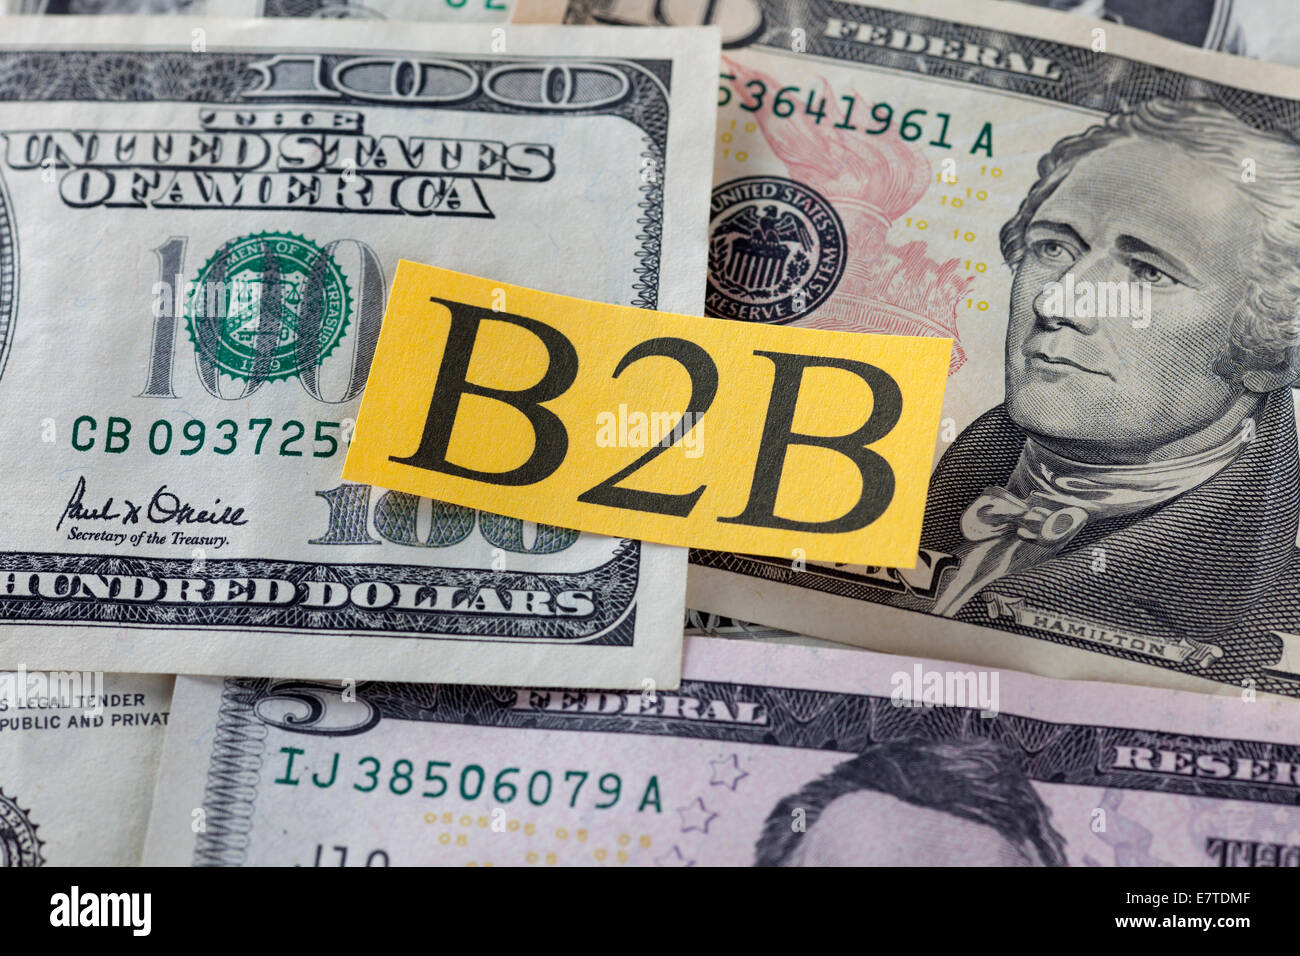 B2B on Dollar Bills (Business to Business). Stock Photo